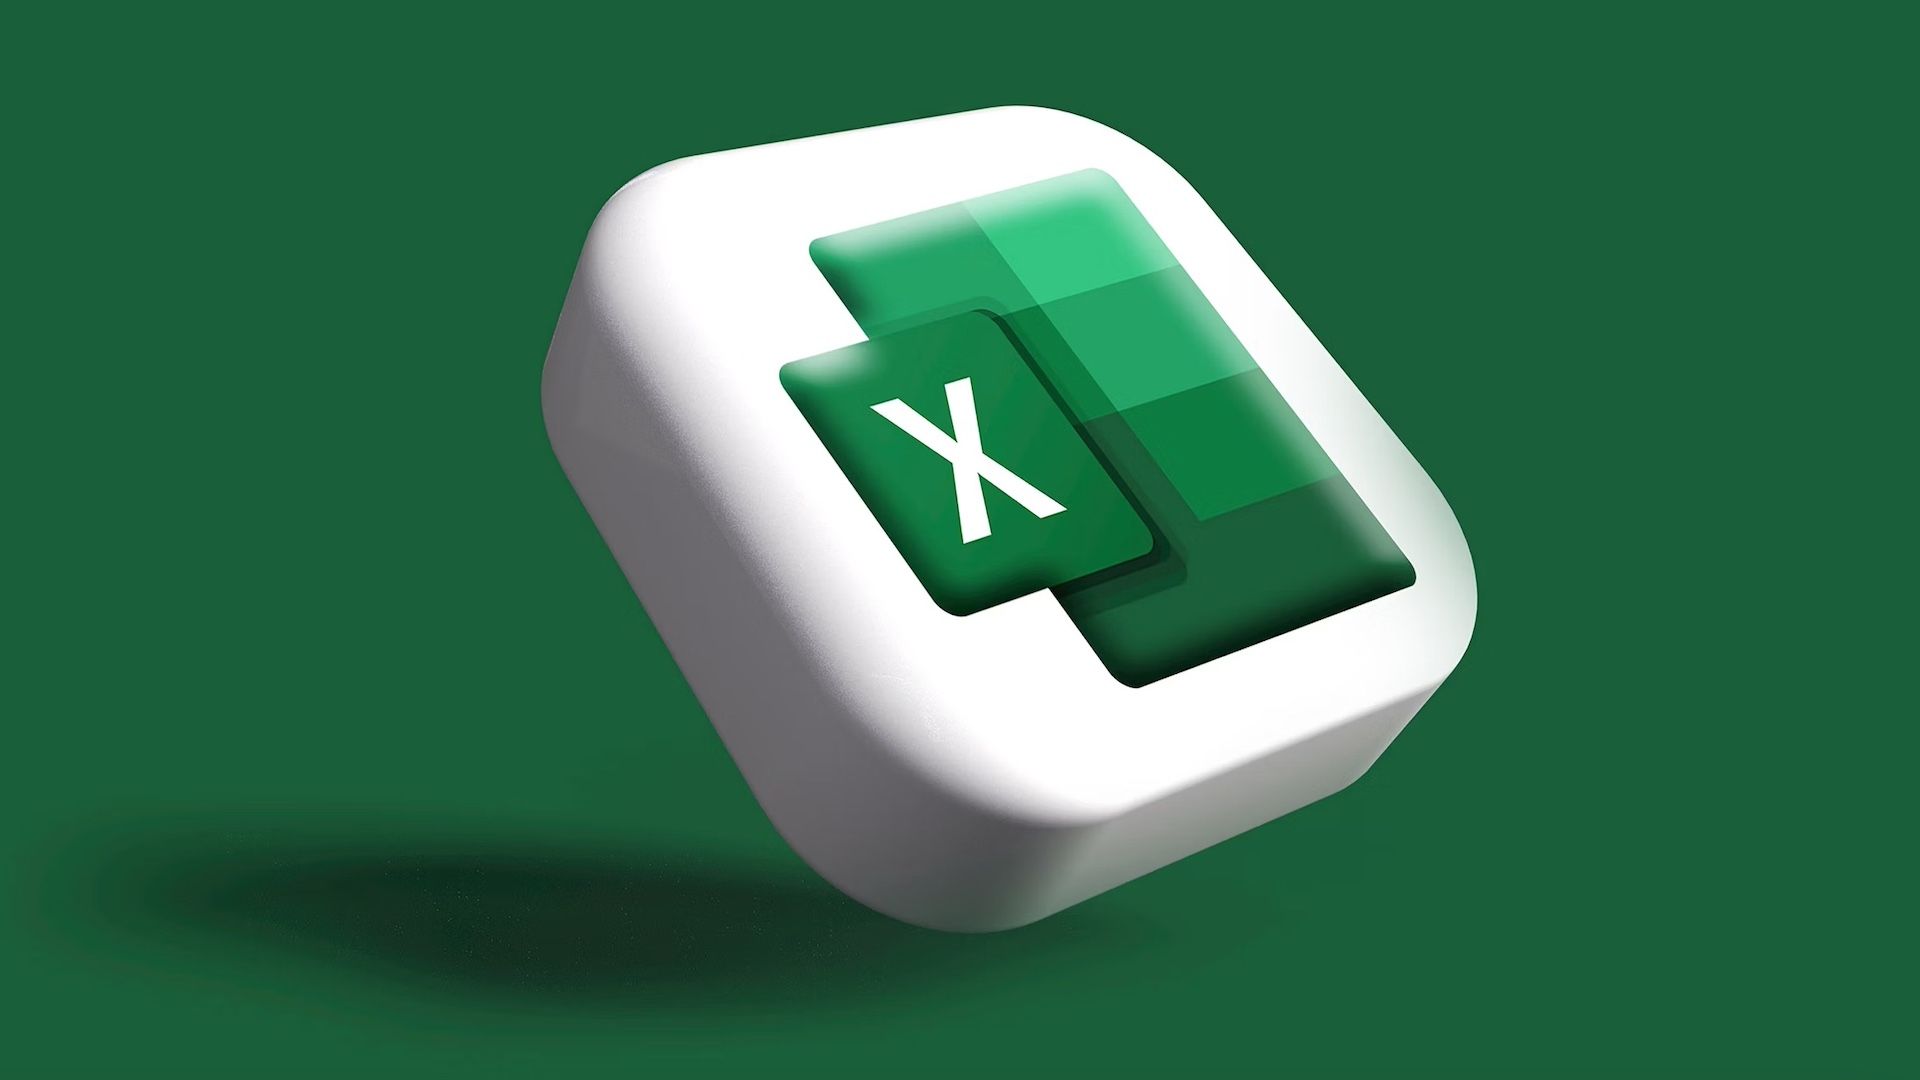 3D Microsoft Excel logo